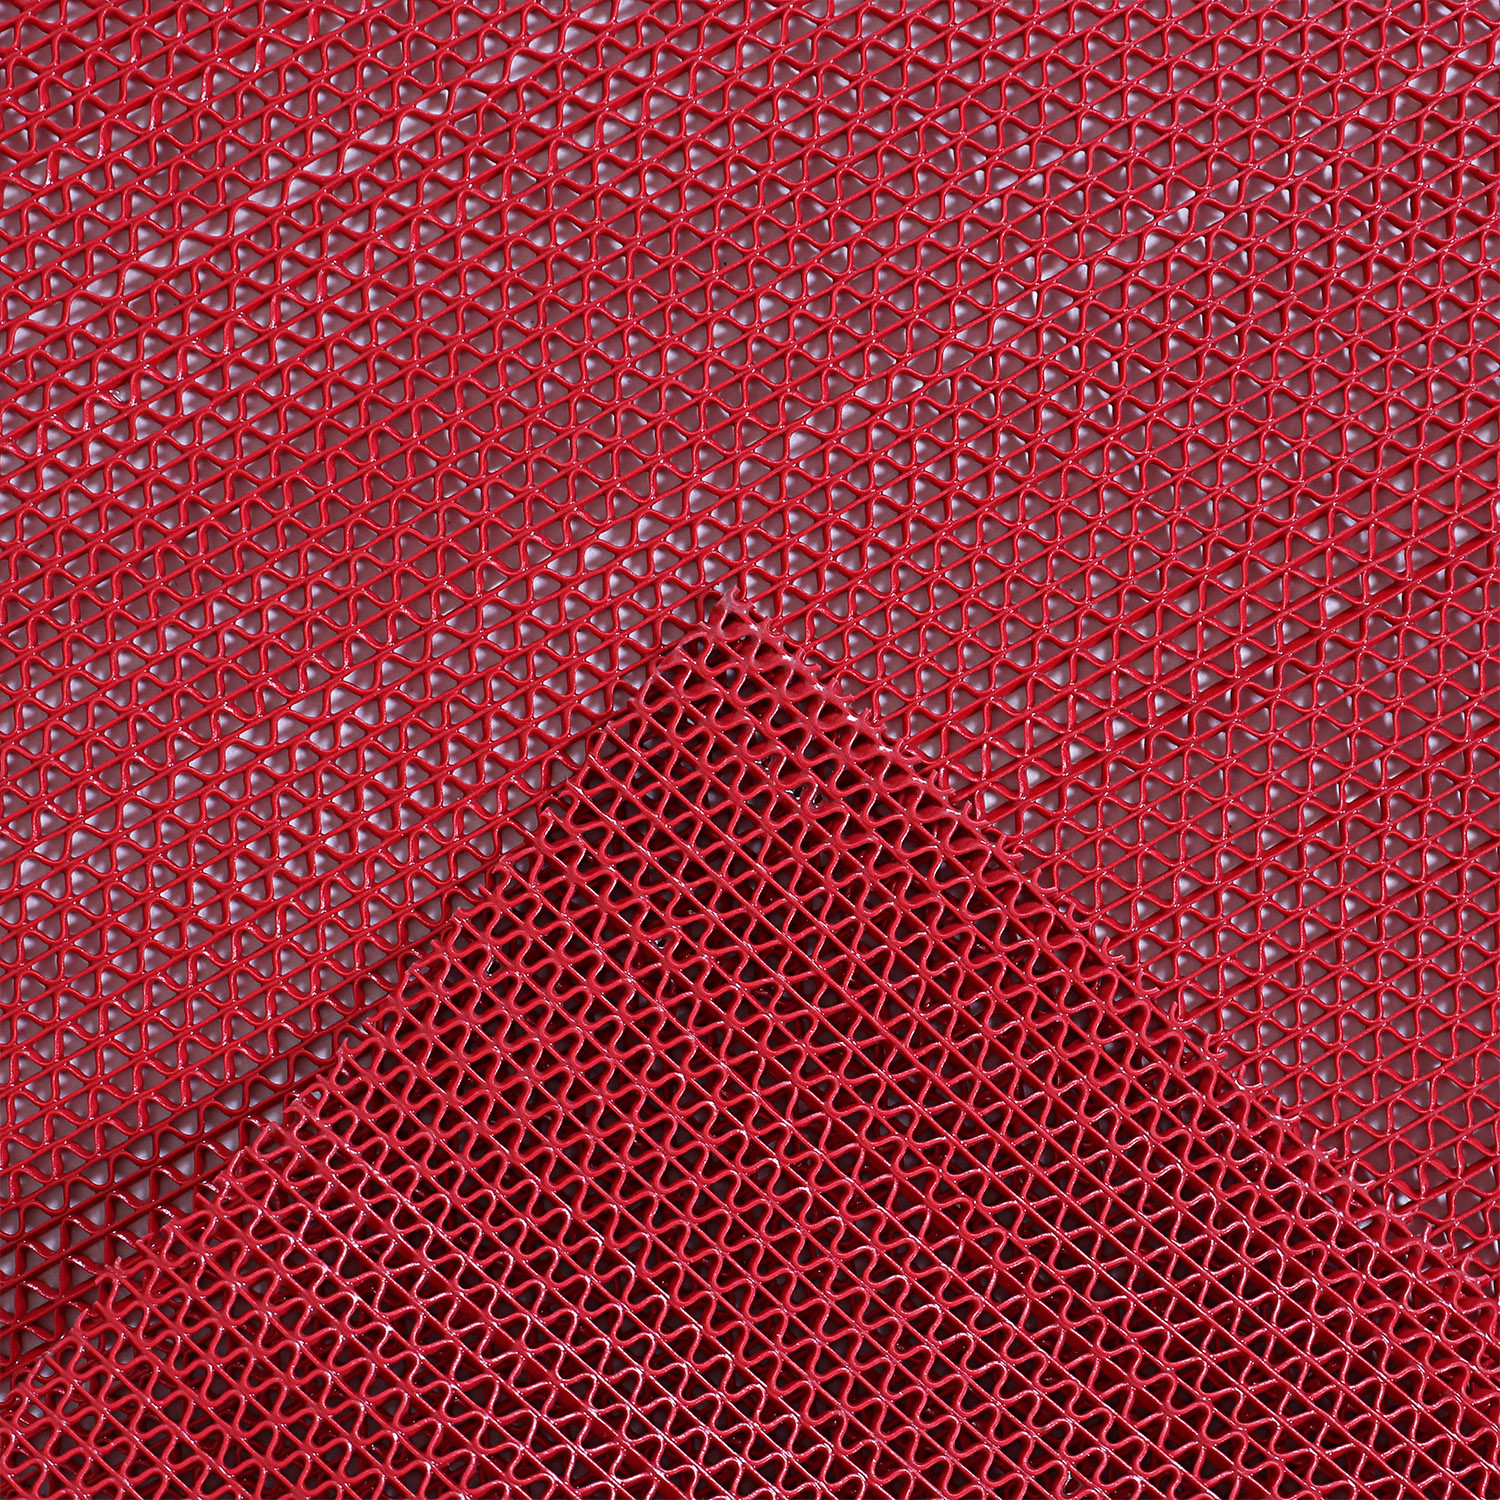 Kuber Industries Rubber Waterproof Anti-Skid Swimming Pool Mat|Shower Mat|Rainmat For Entrance Area,Bathroom,2 x 6 Feet (Red)